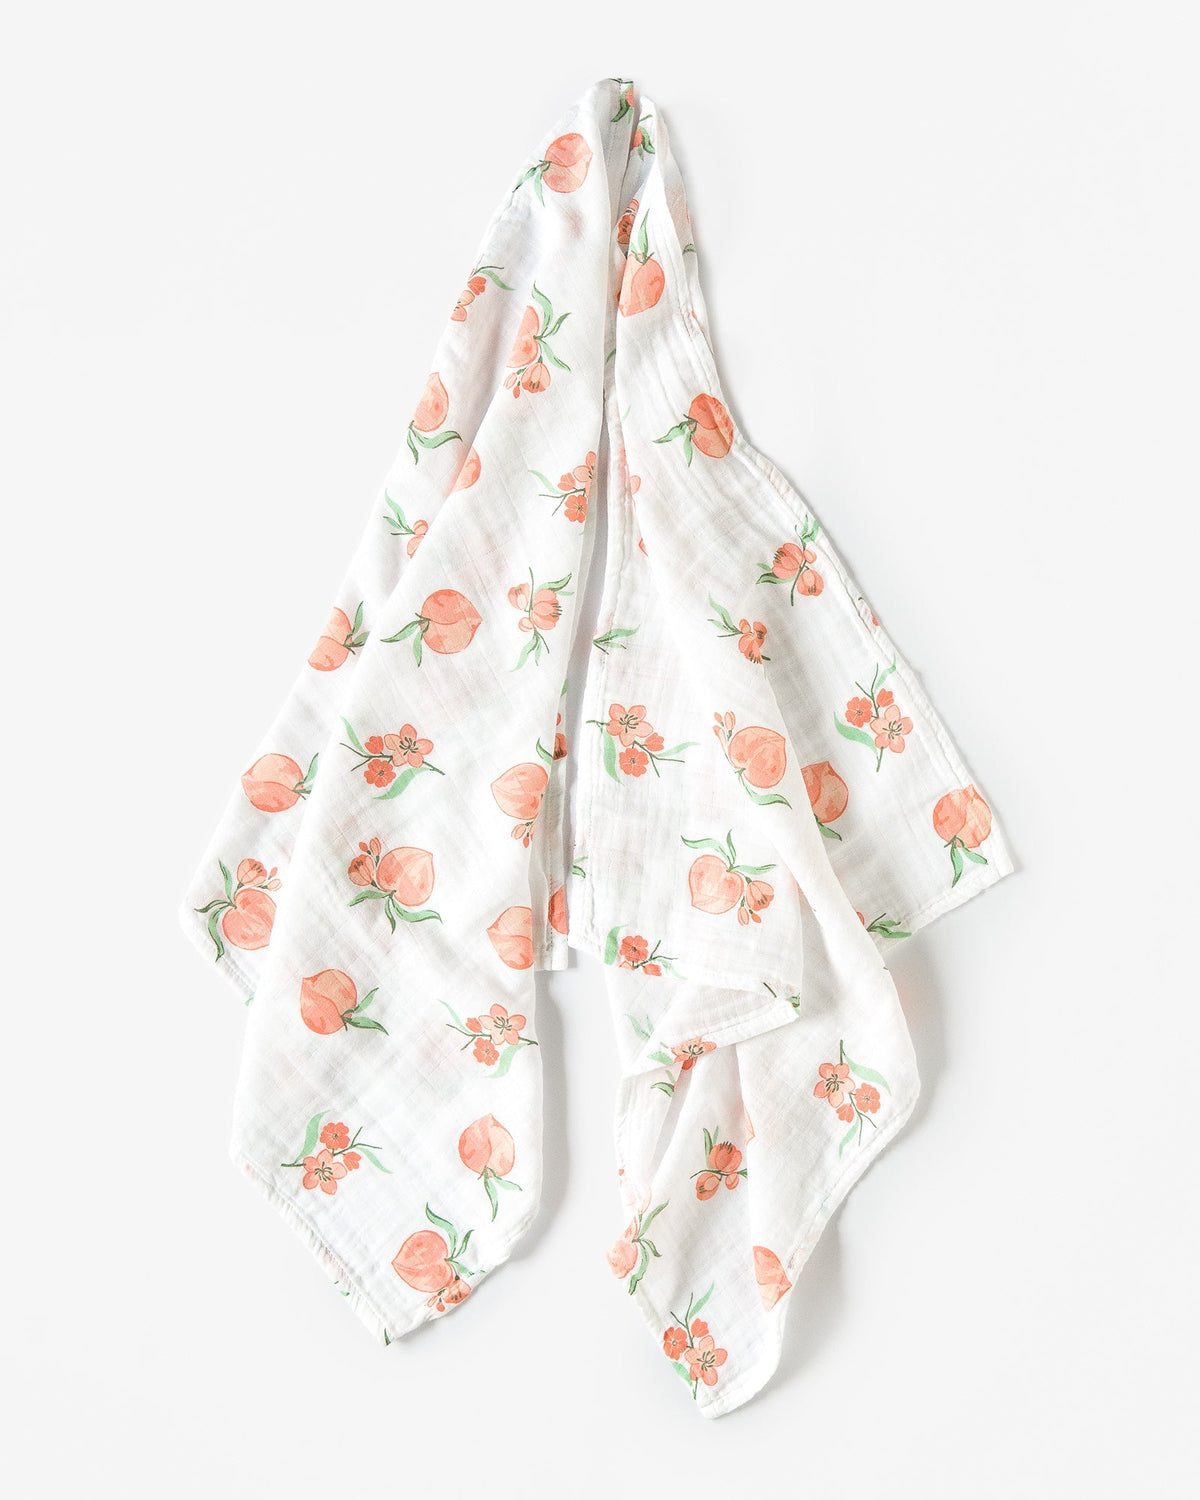 Organic cotton muslin square cloths with peach pattern draped